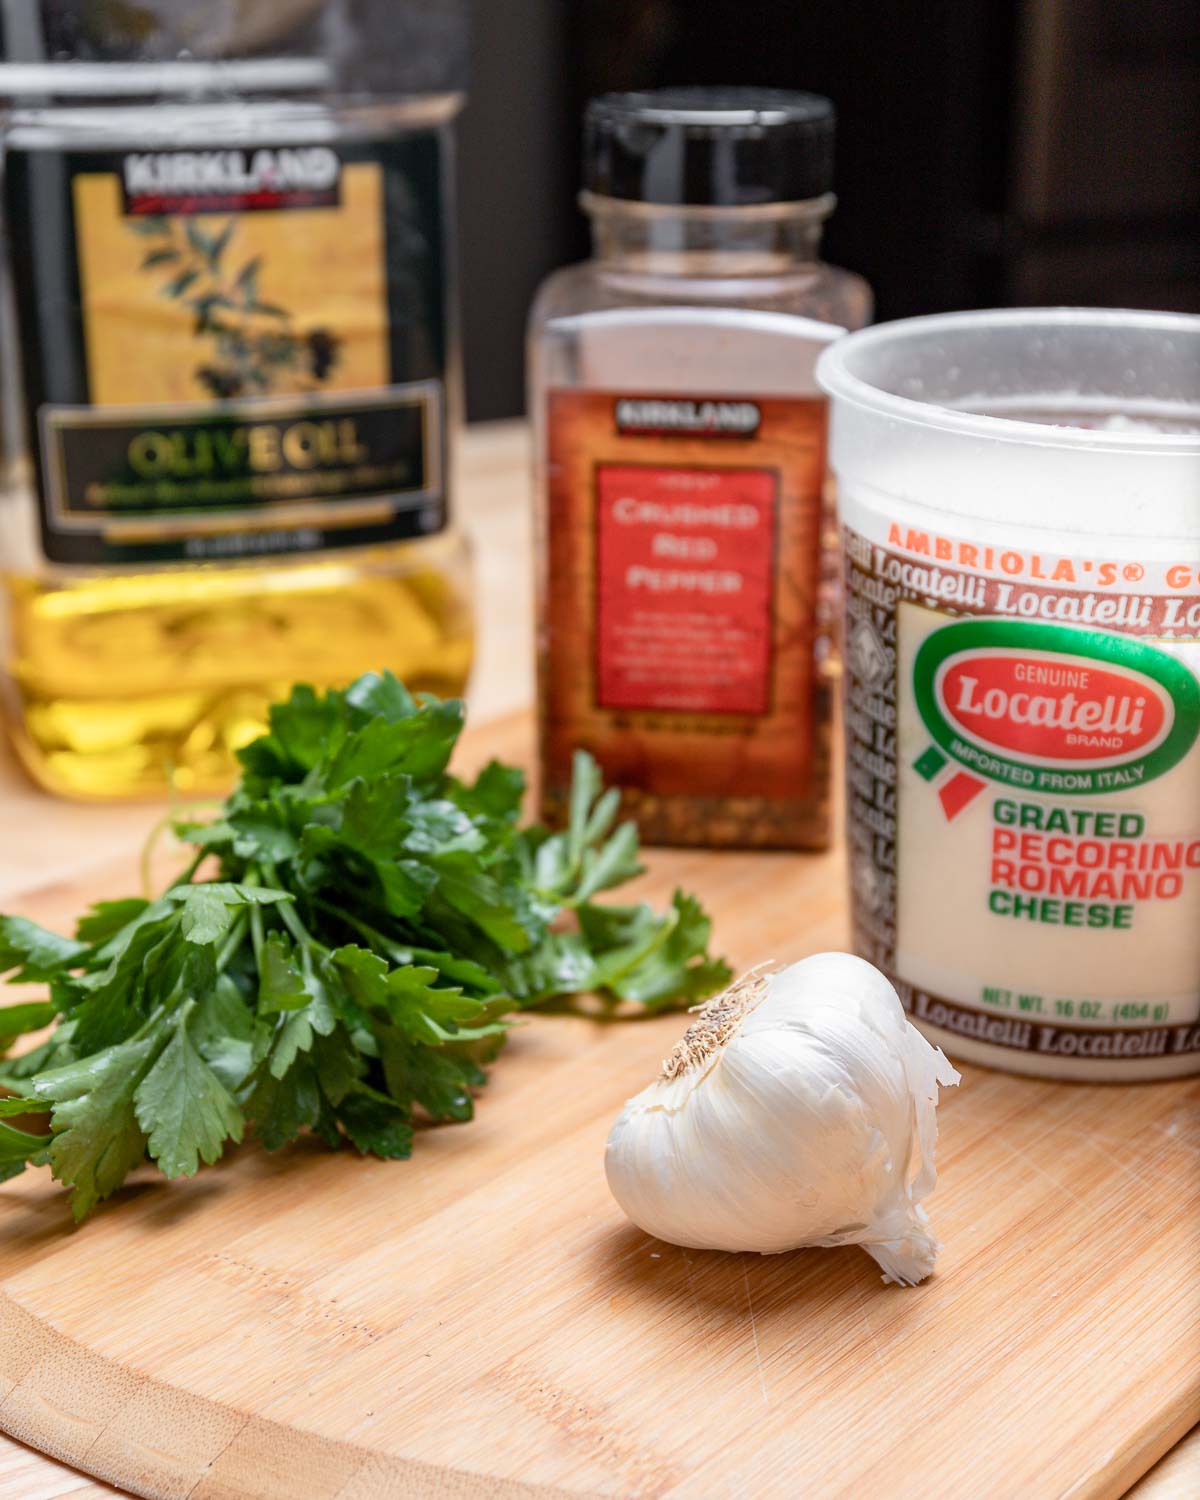 Ingredients shown: Olive oil, parsley, chili flakes, Pecorino Romano, and garlic.